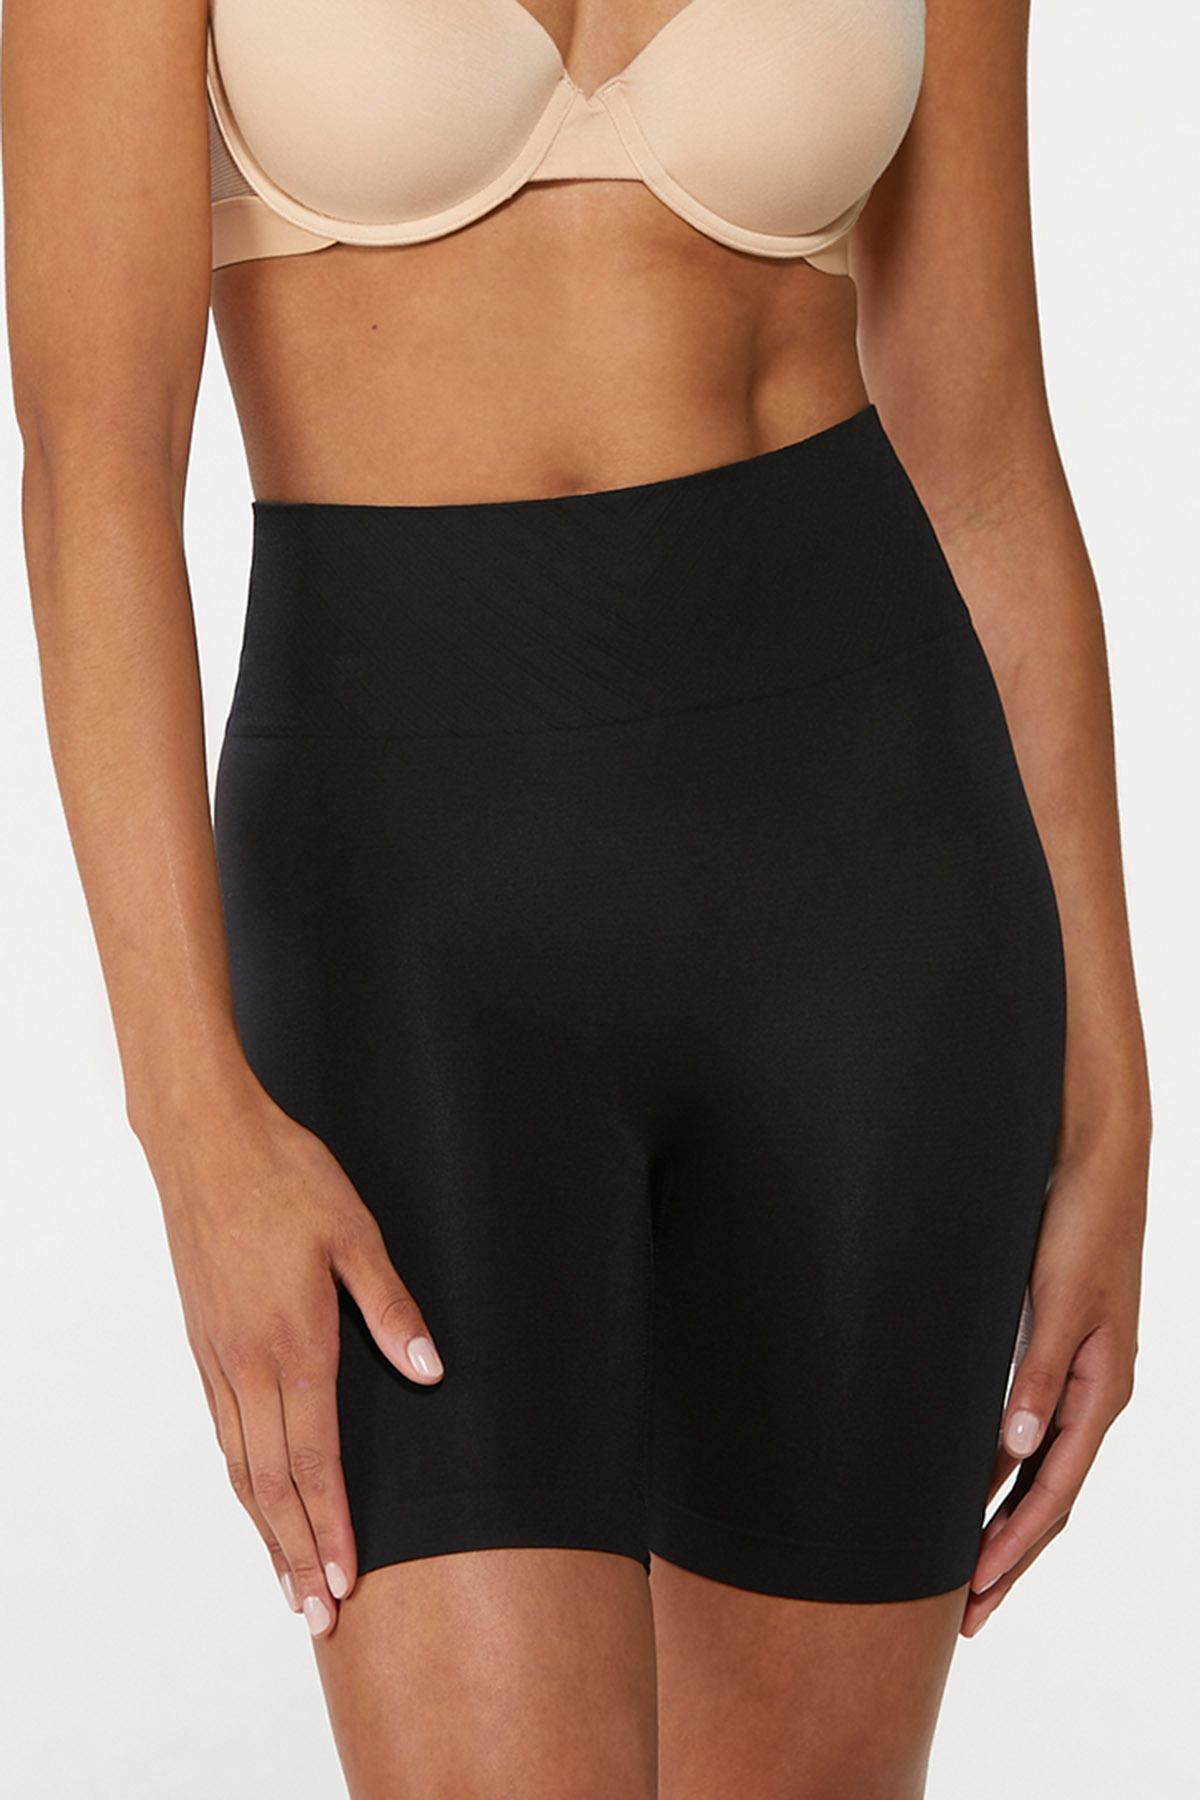 Spanx XSmall Black Gold Womens Shorts XS Animal Print Shiny Pull On Shaper  GUC 